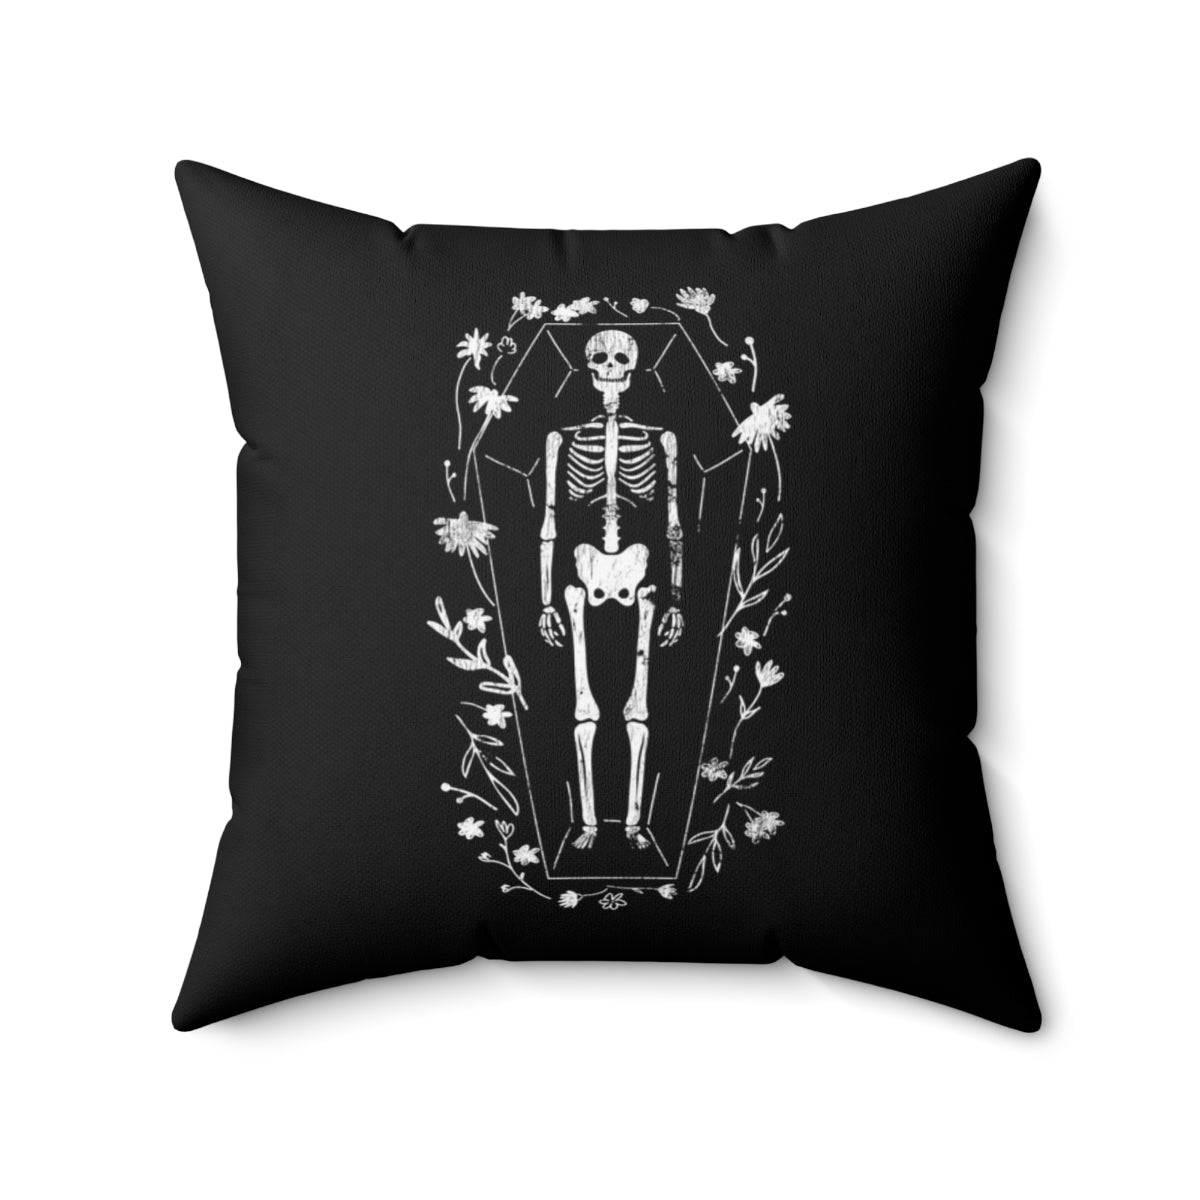 Skeleton Pillow Cover / Halloween / Black White